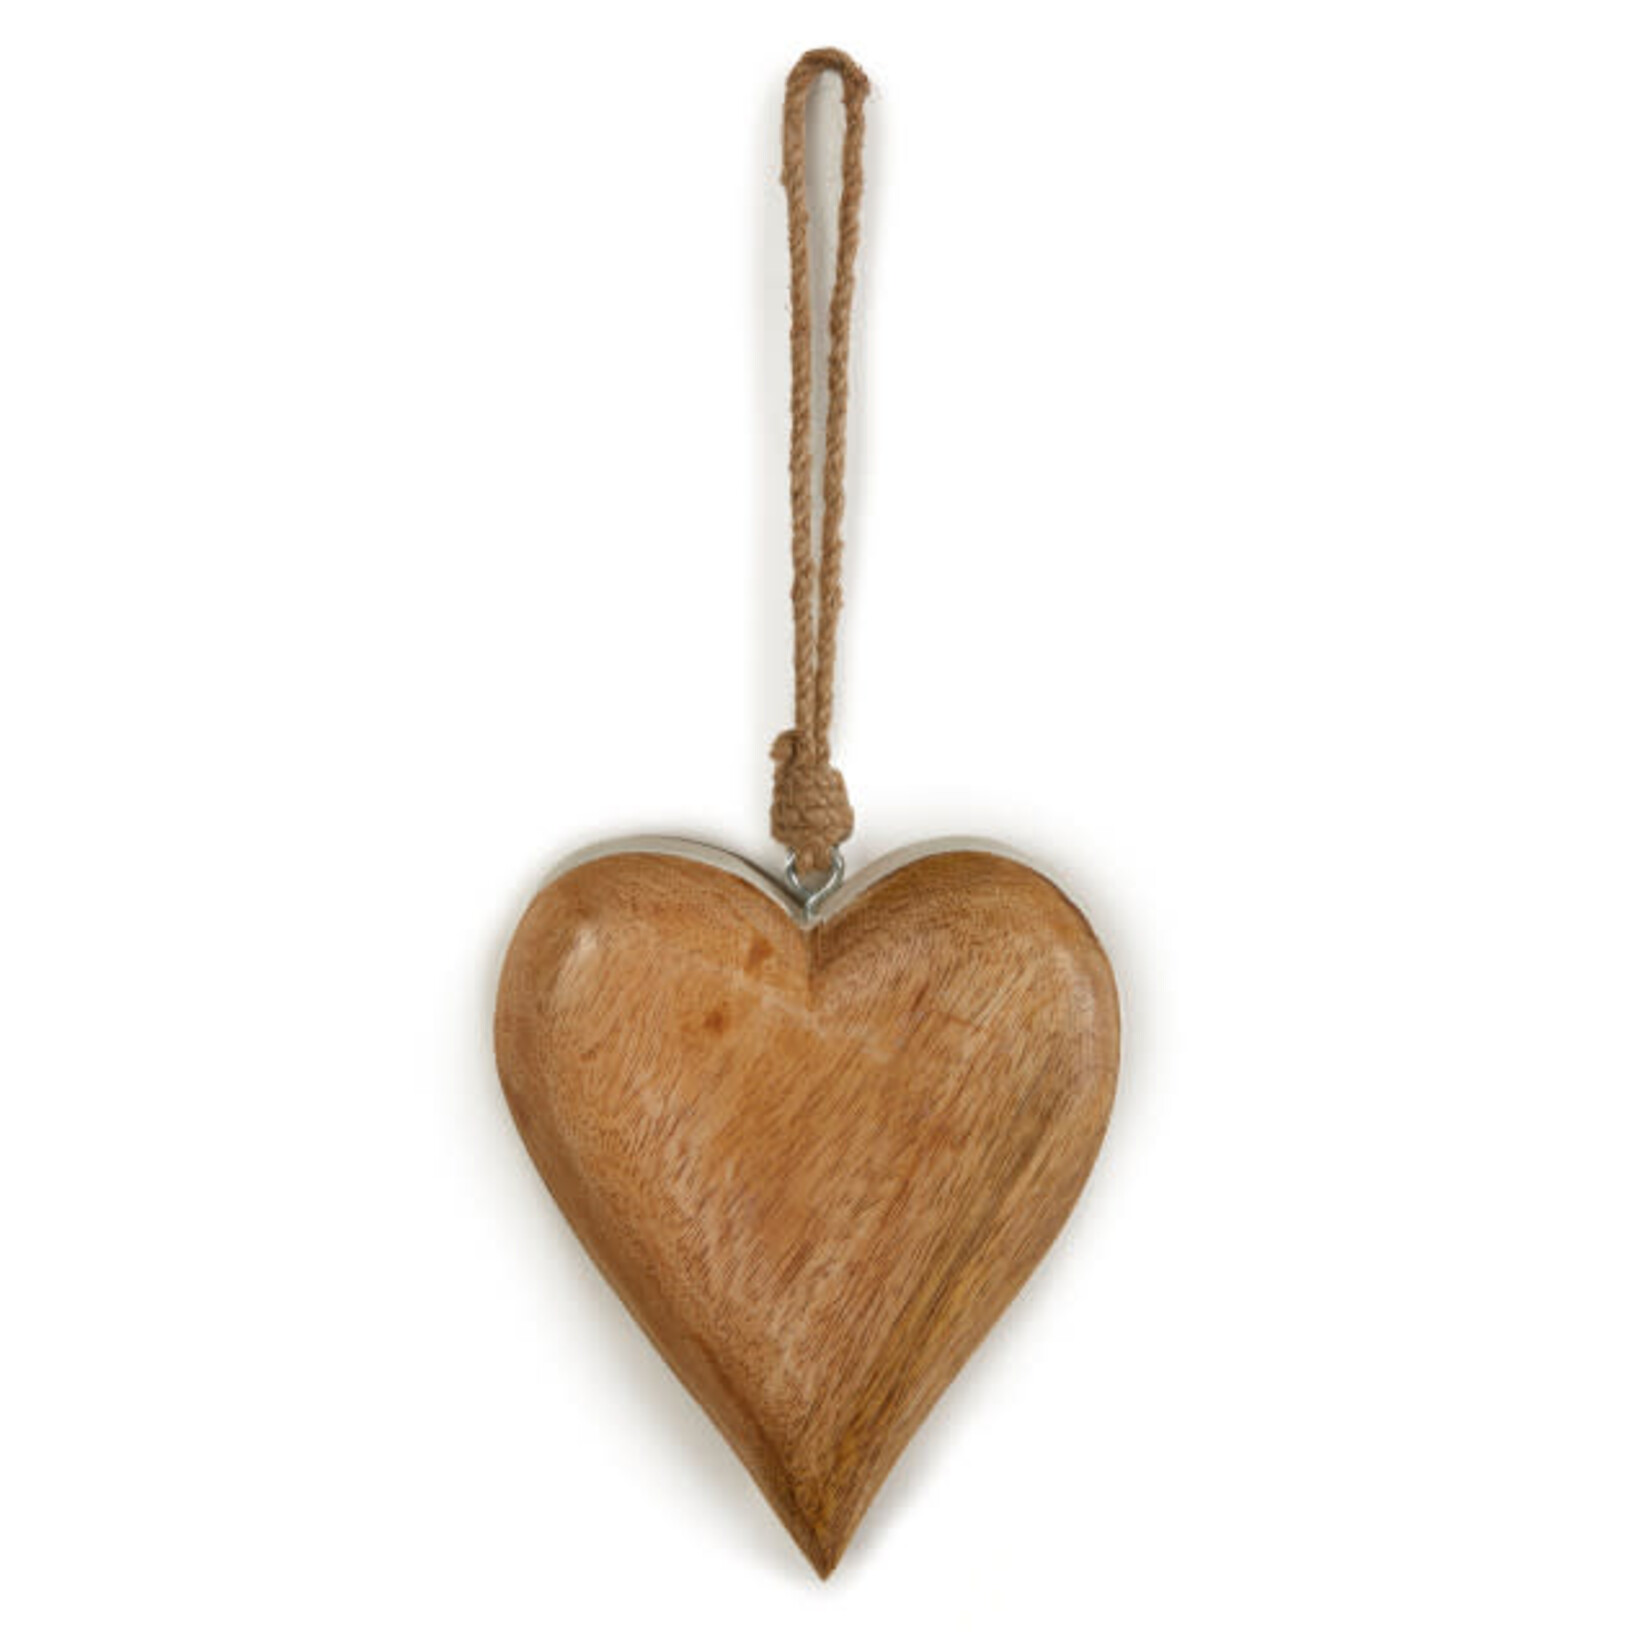 Demdaco Wood Heart with White Edge Ornament